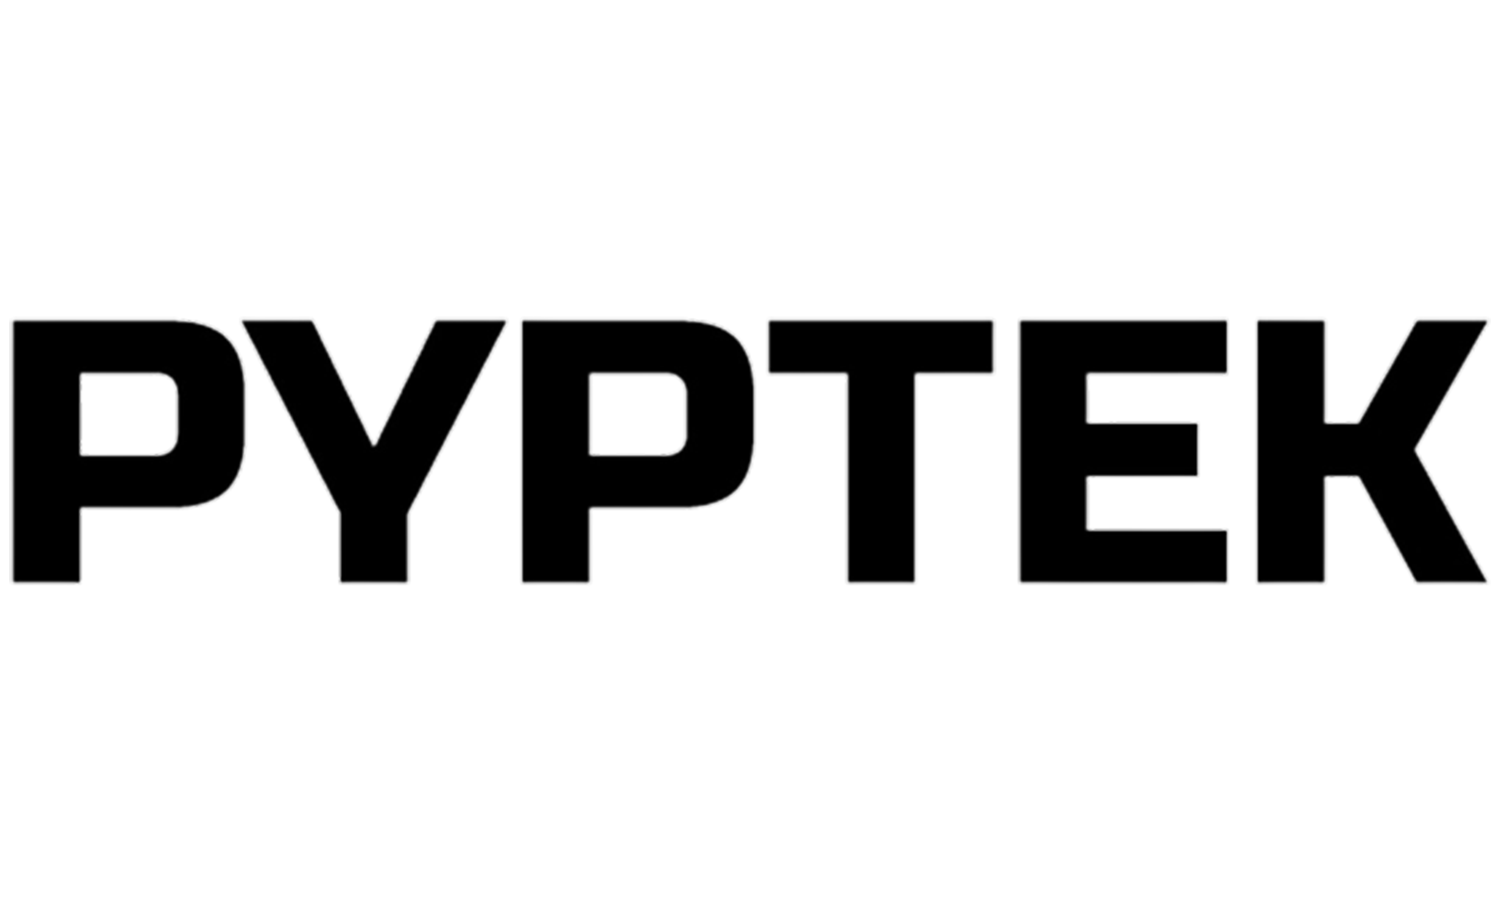 Pyptek Wholesale Logo